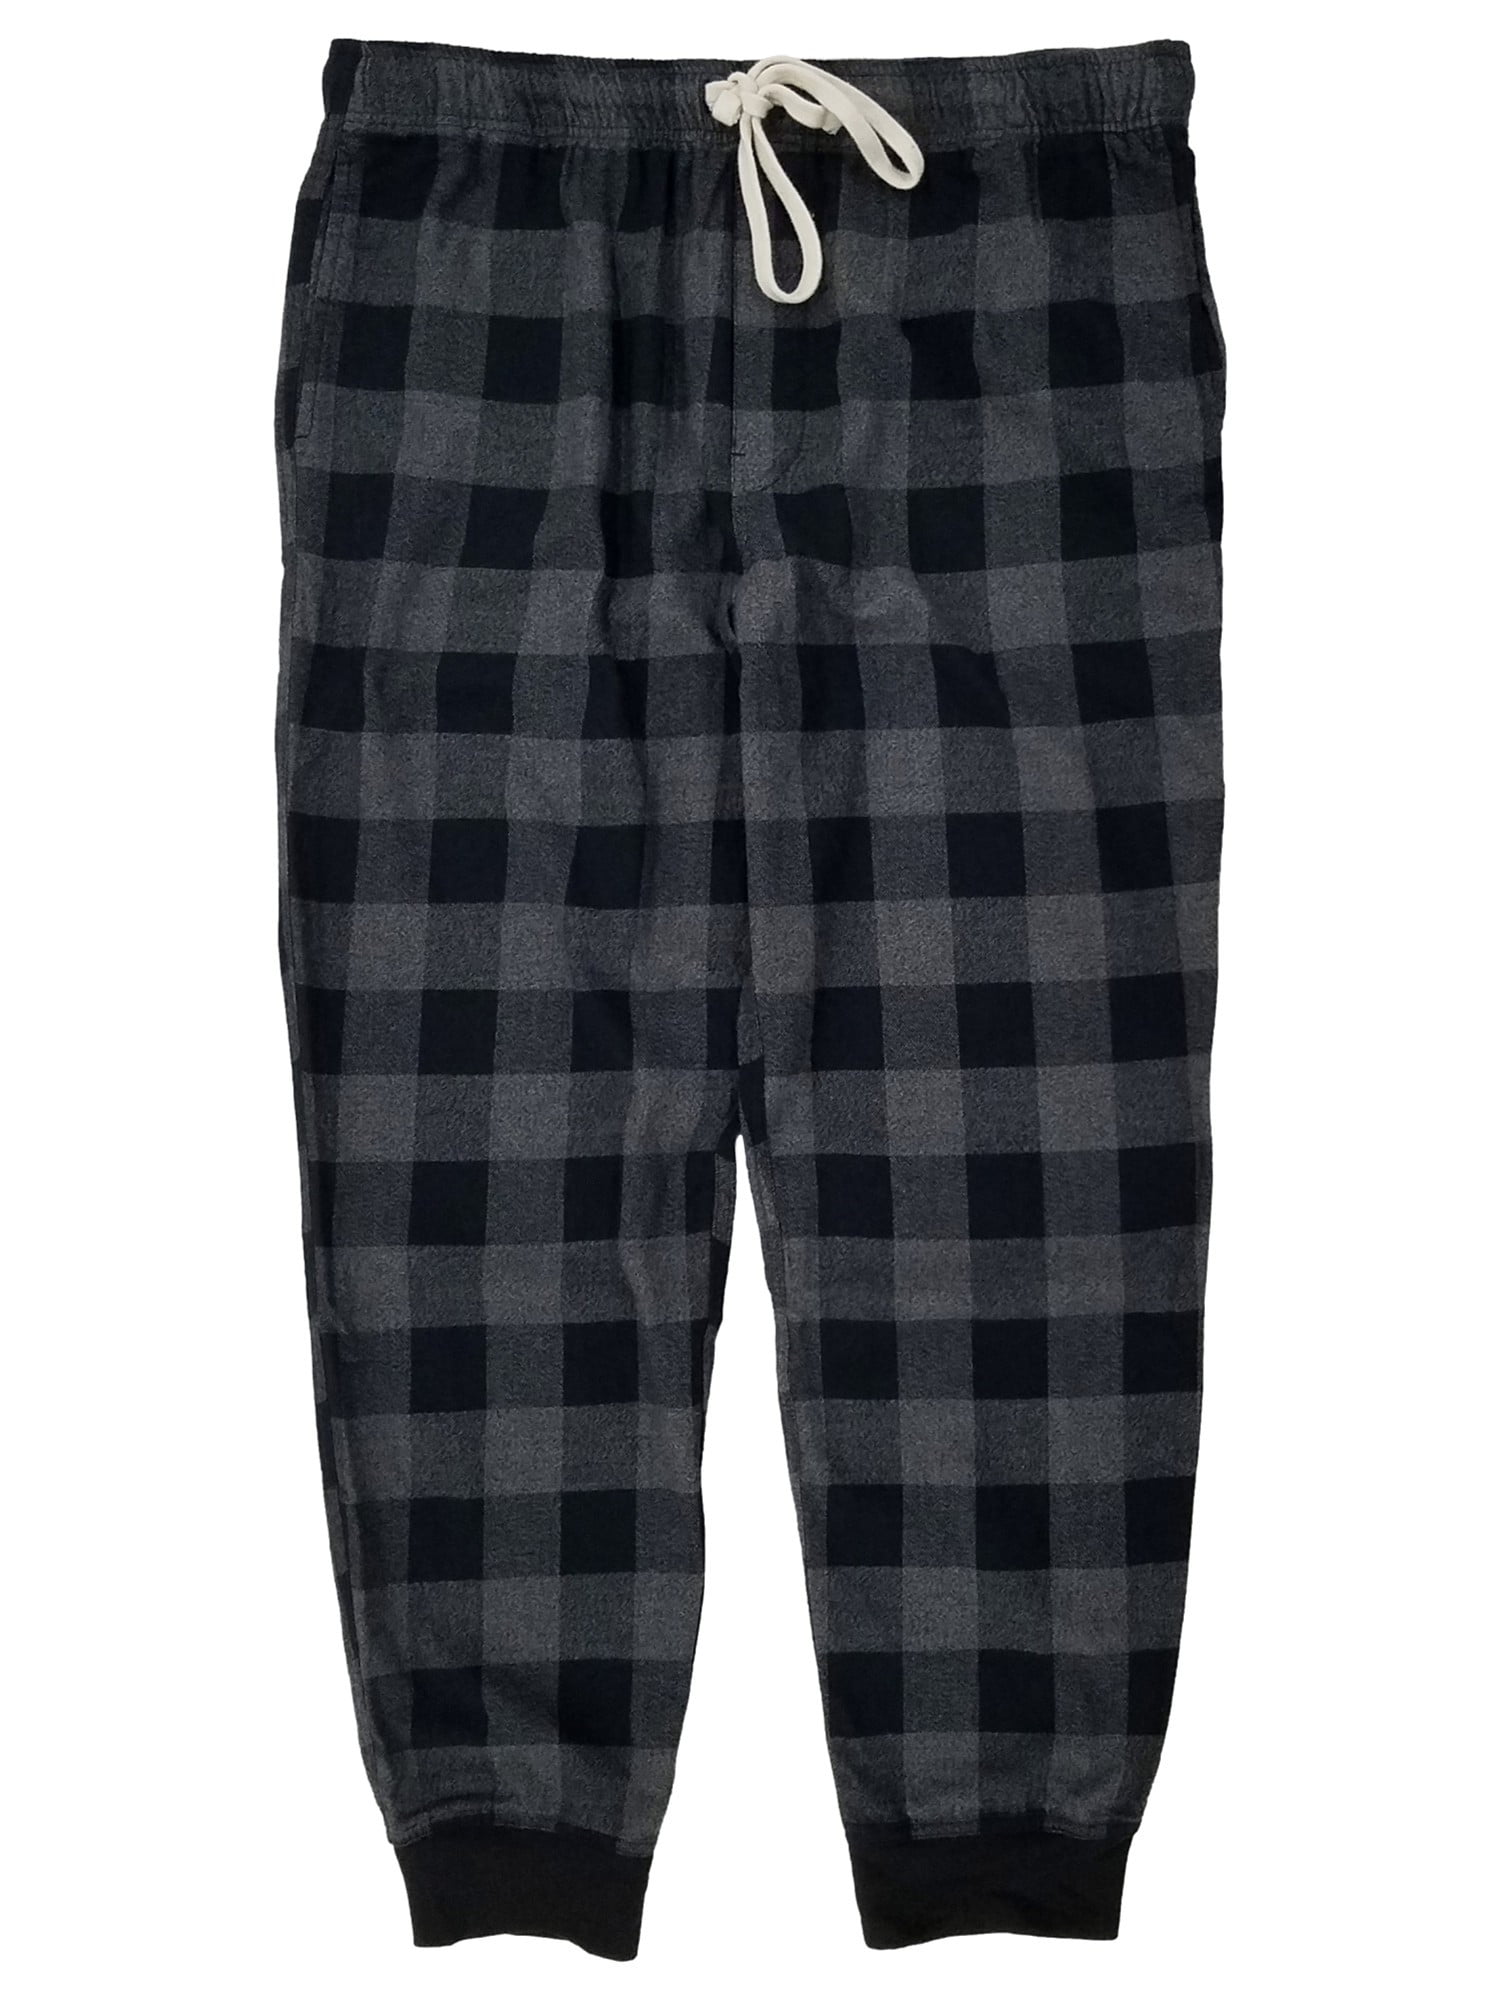 Mens Black & Gray Buffalo Plaid Flannel Jogger Sleep Pants Pajama Bottoms  Large 